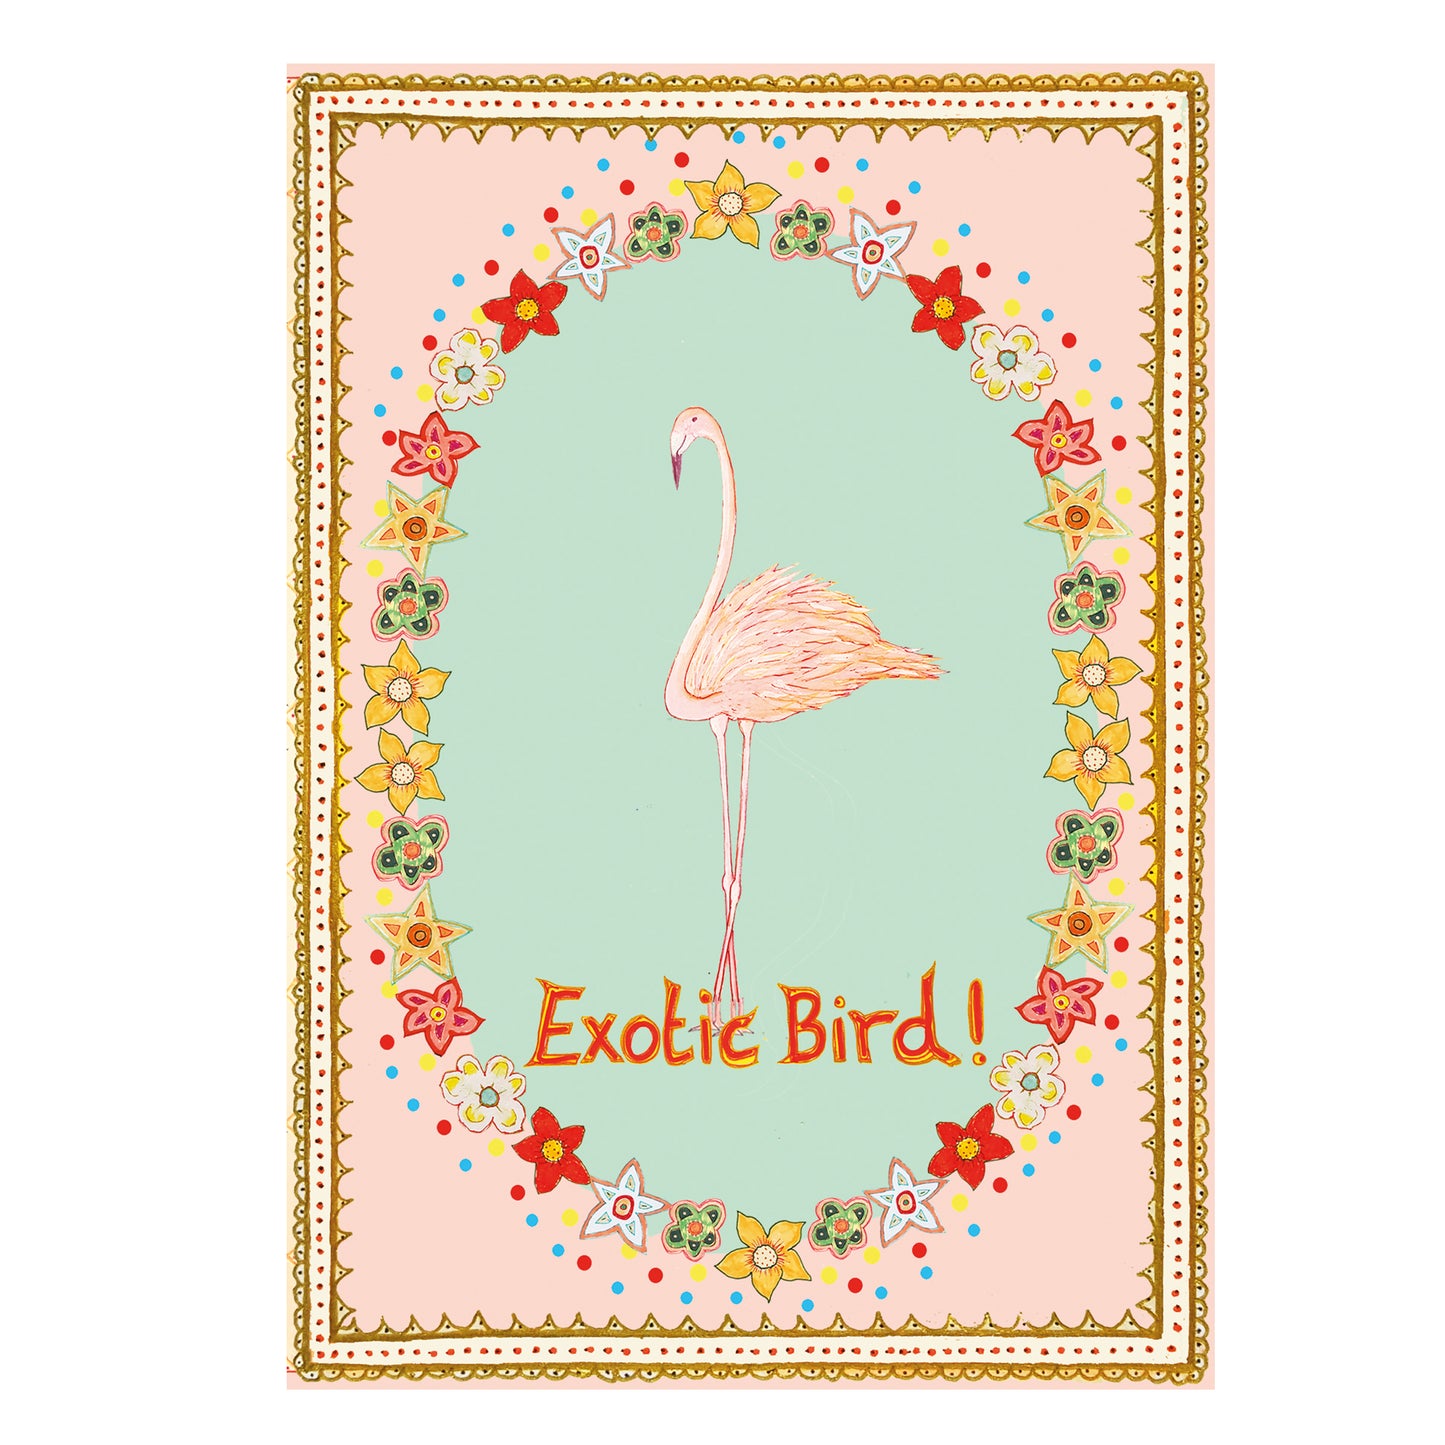 Exotic Bird Card